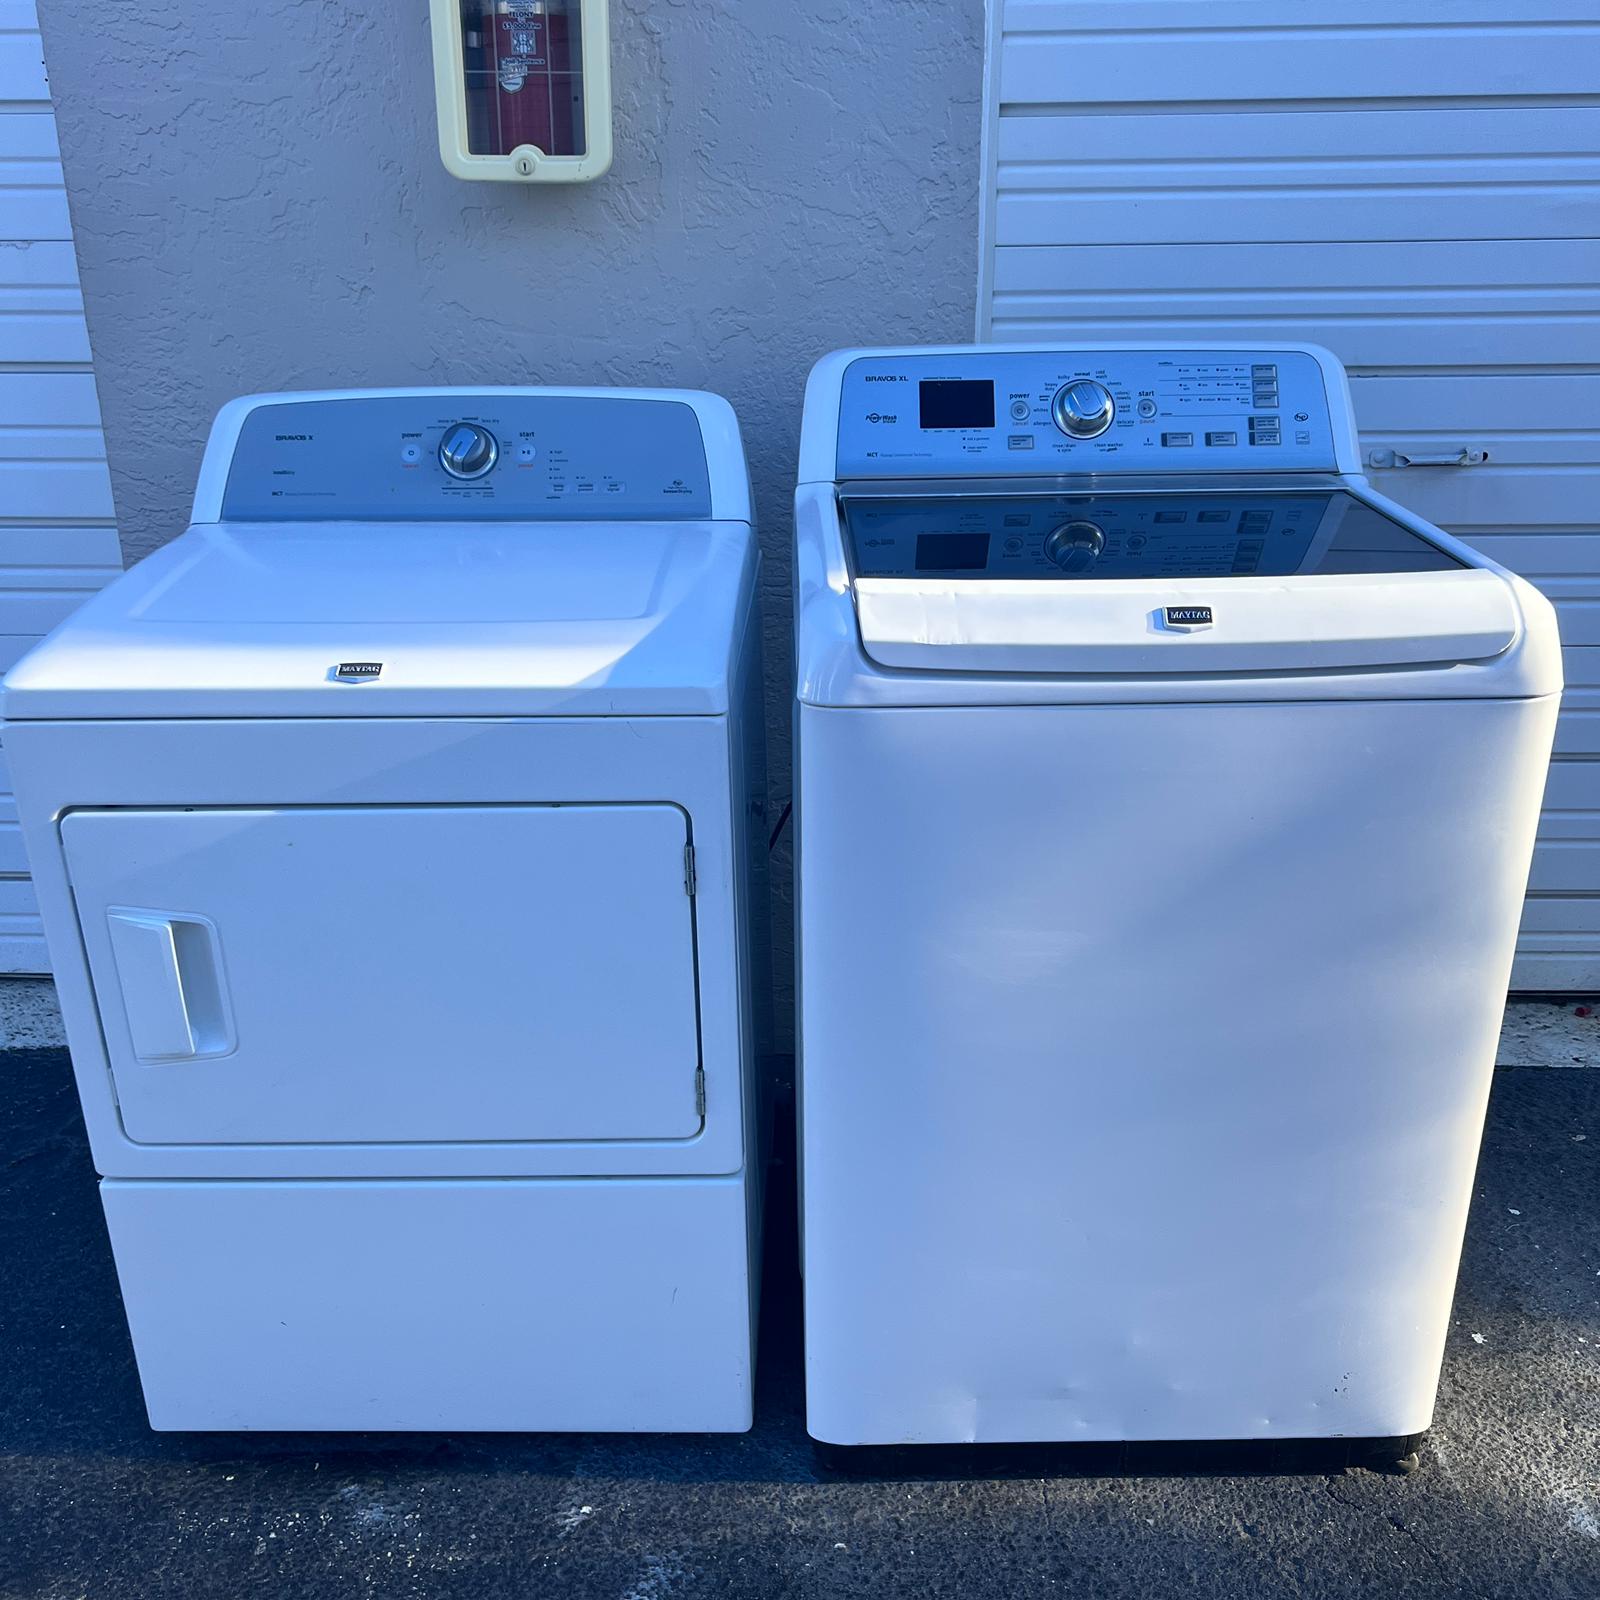 Maytag Bravos XL Washer and Dryer Set